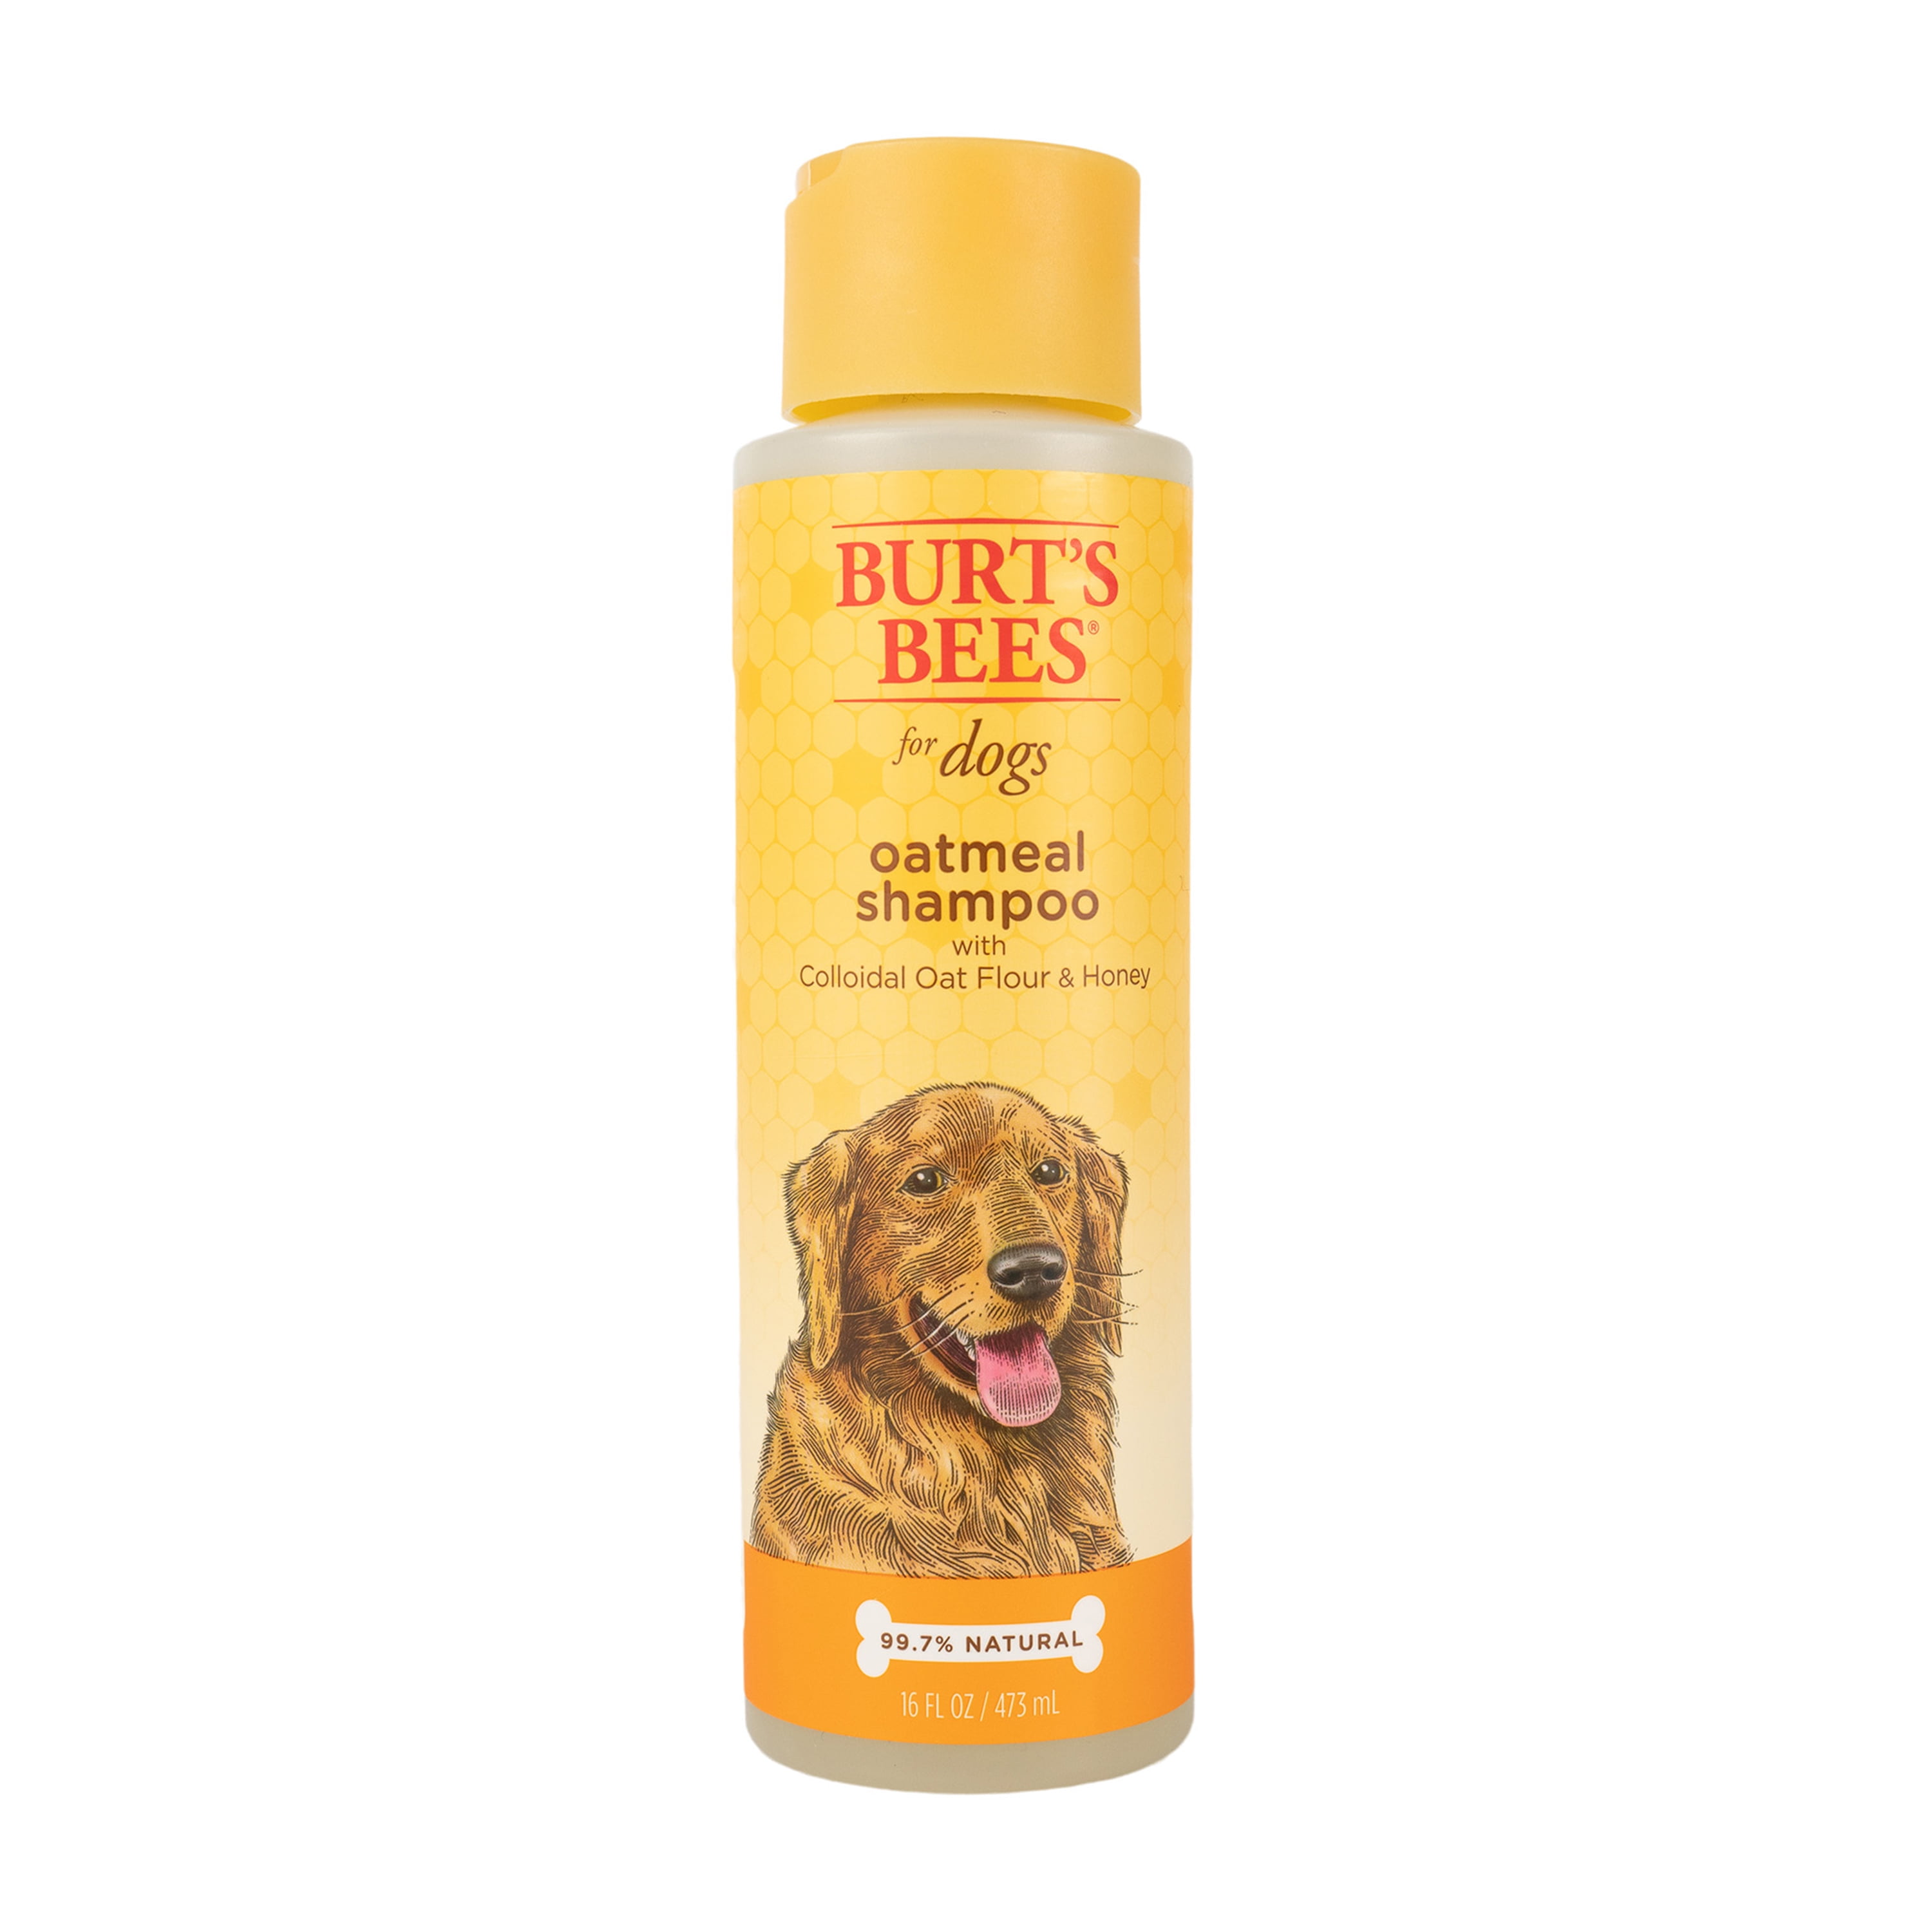 Burt's Bees Natural Pet Care Oatmeal Dog Shampoo with Colloidal Oat Flour and Honey, 16 oz.